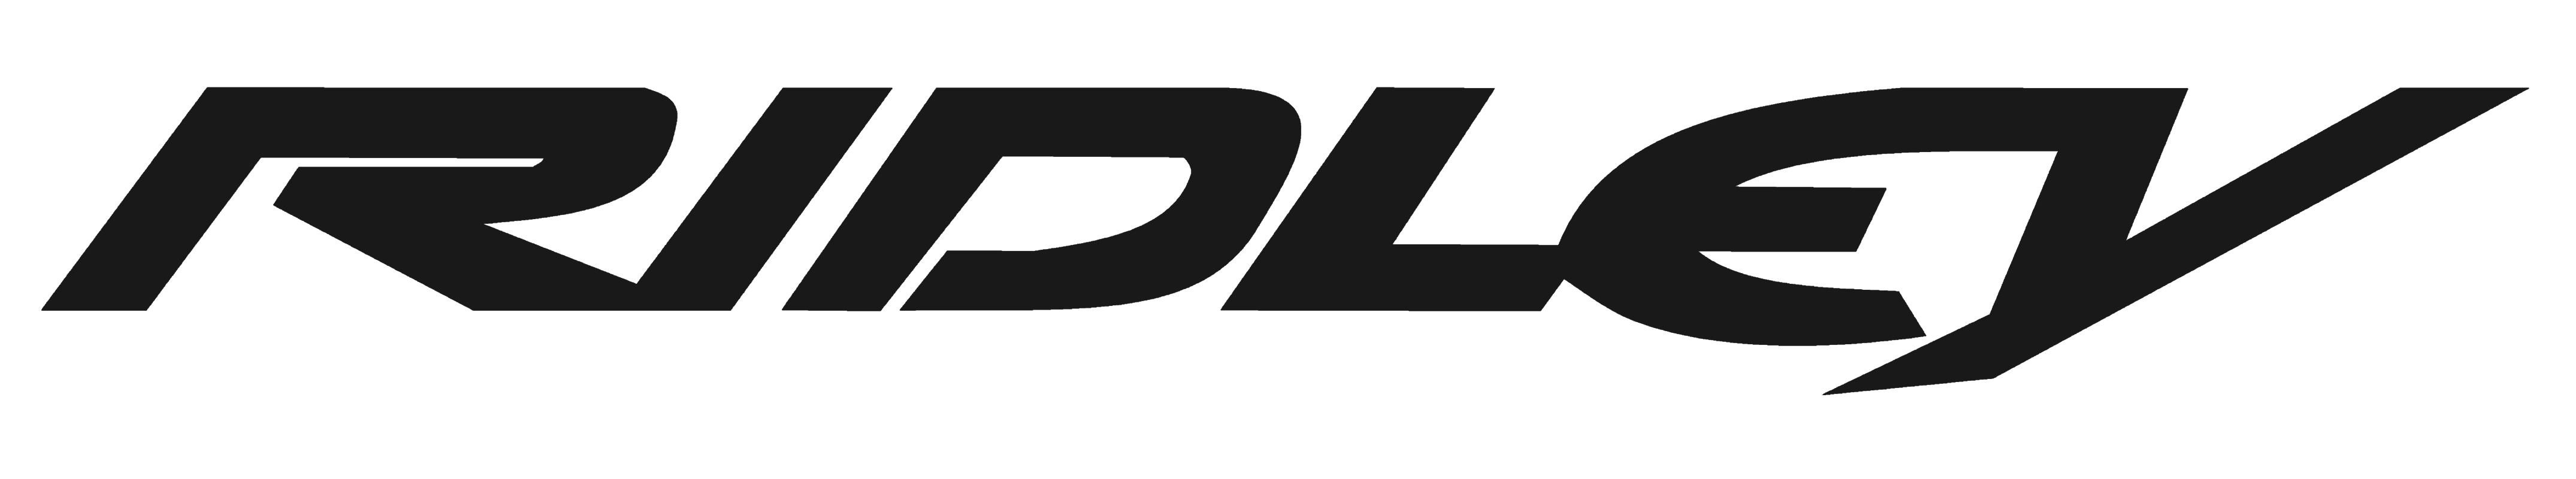 Ridley Bikes logo, logotype